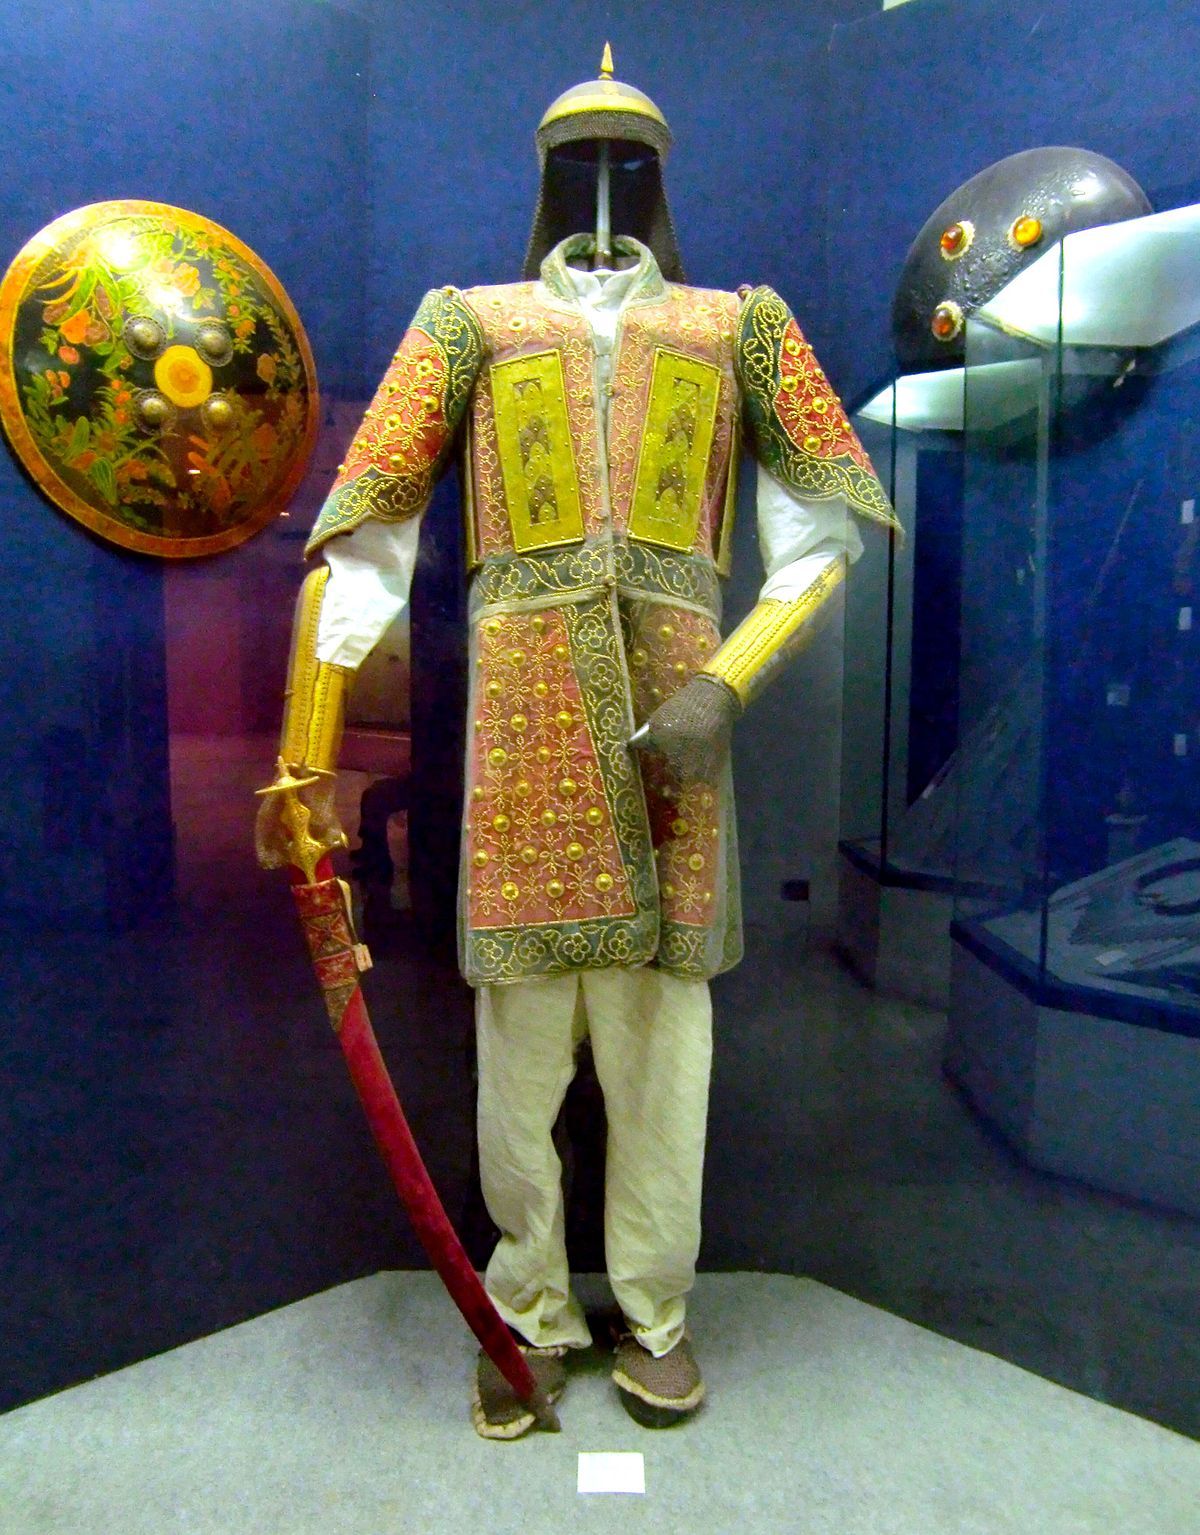 1200px-Armor_coat_Rajasthan01.jpg